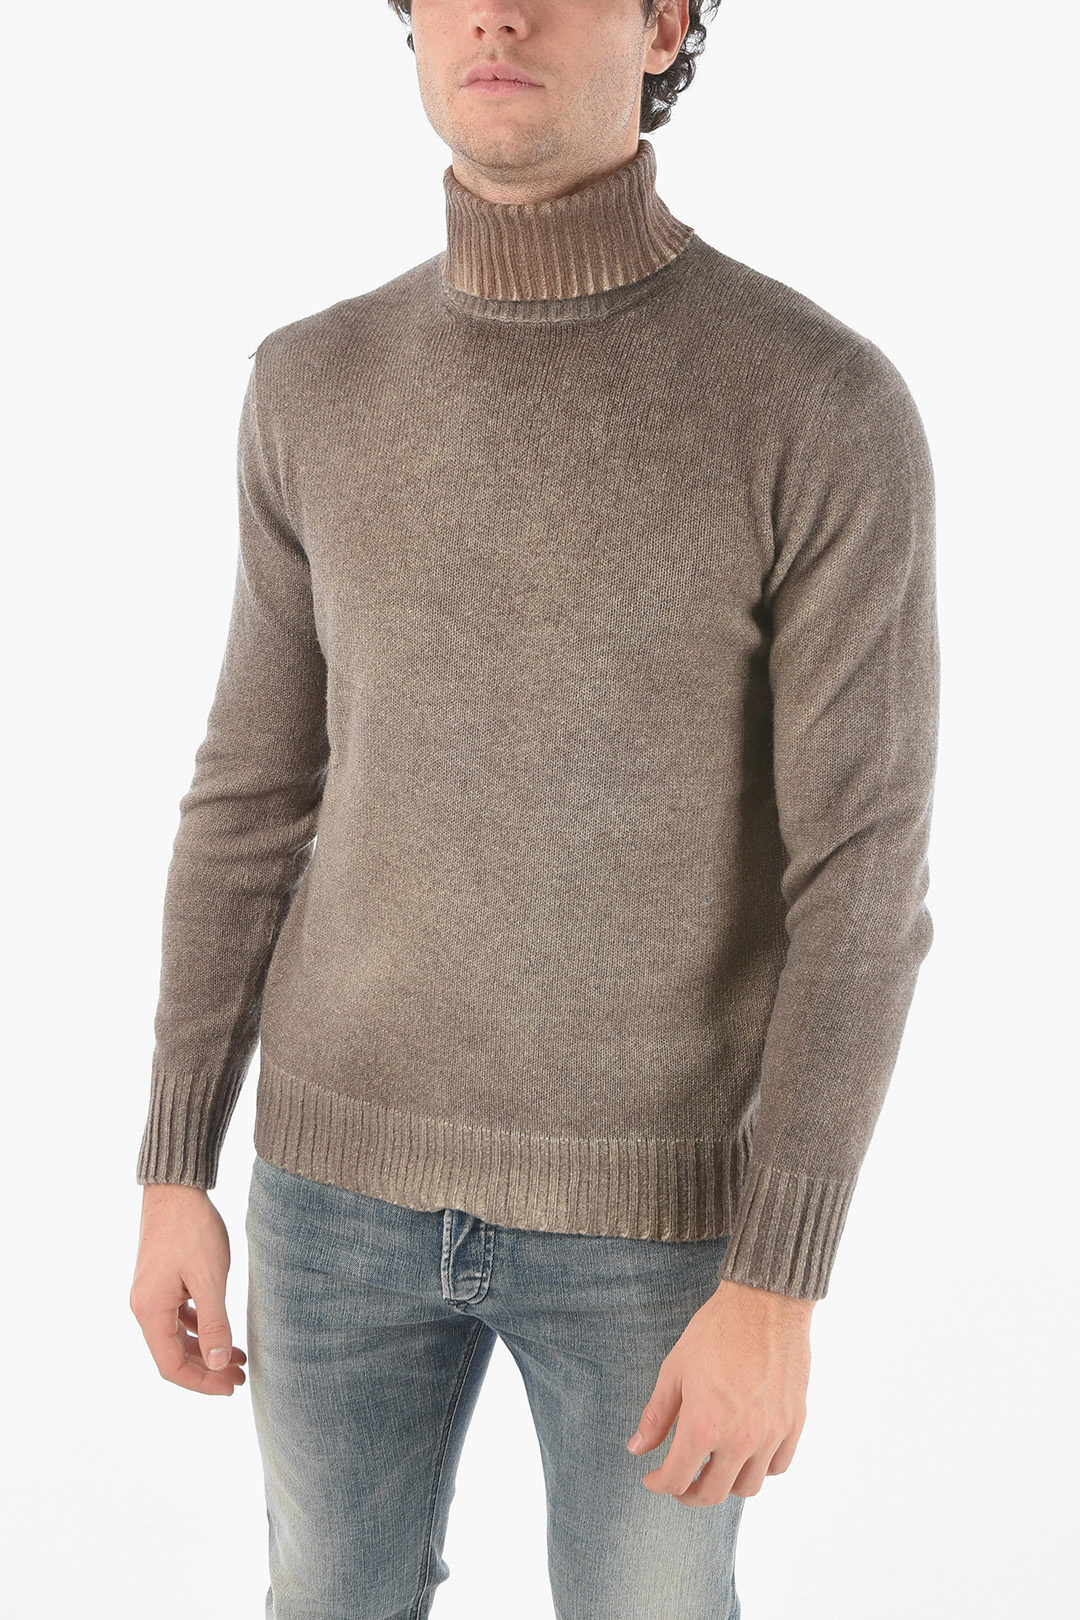 Altea Turtleneck Virgin Wool Blend Sweater men - Glamood Outlet